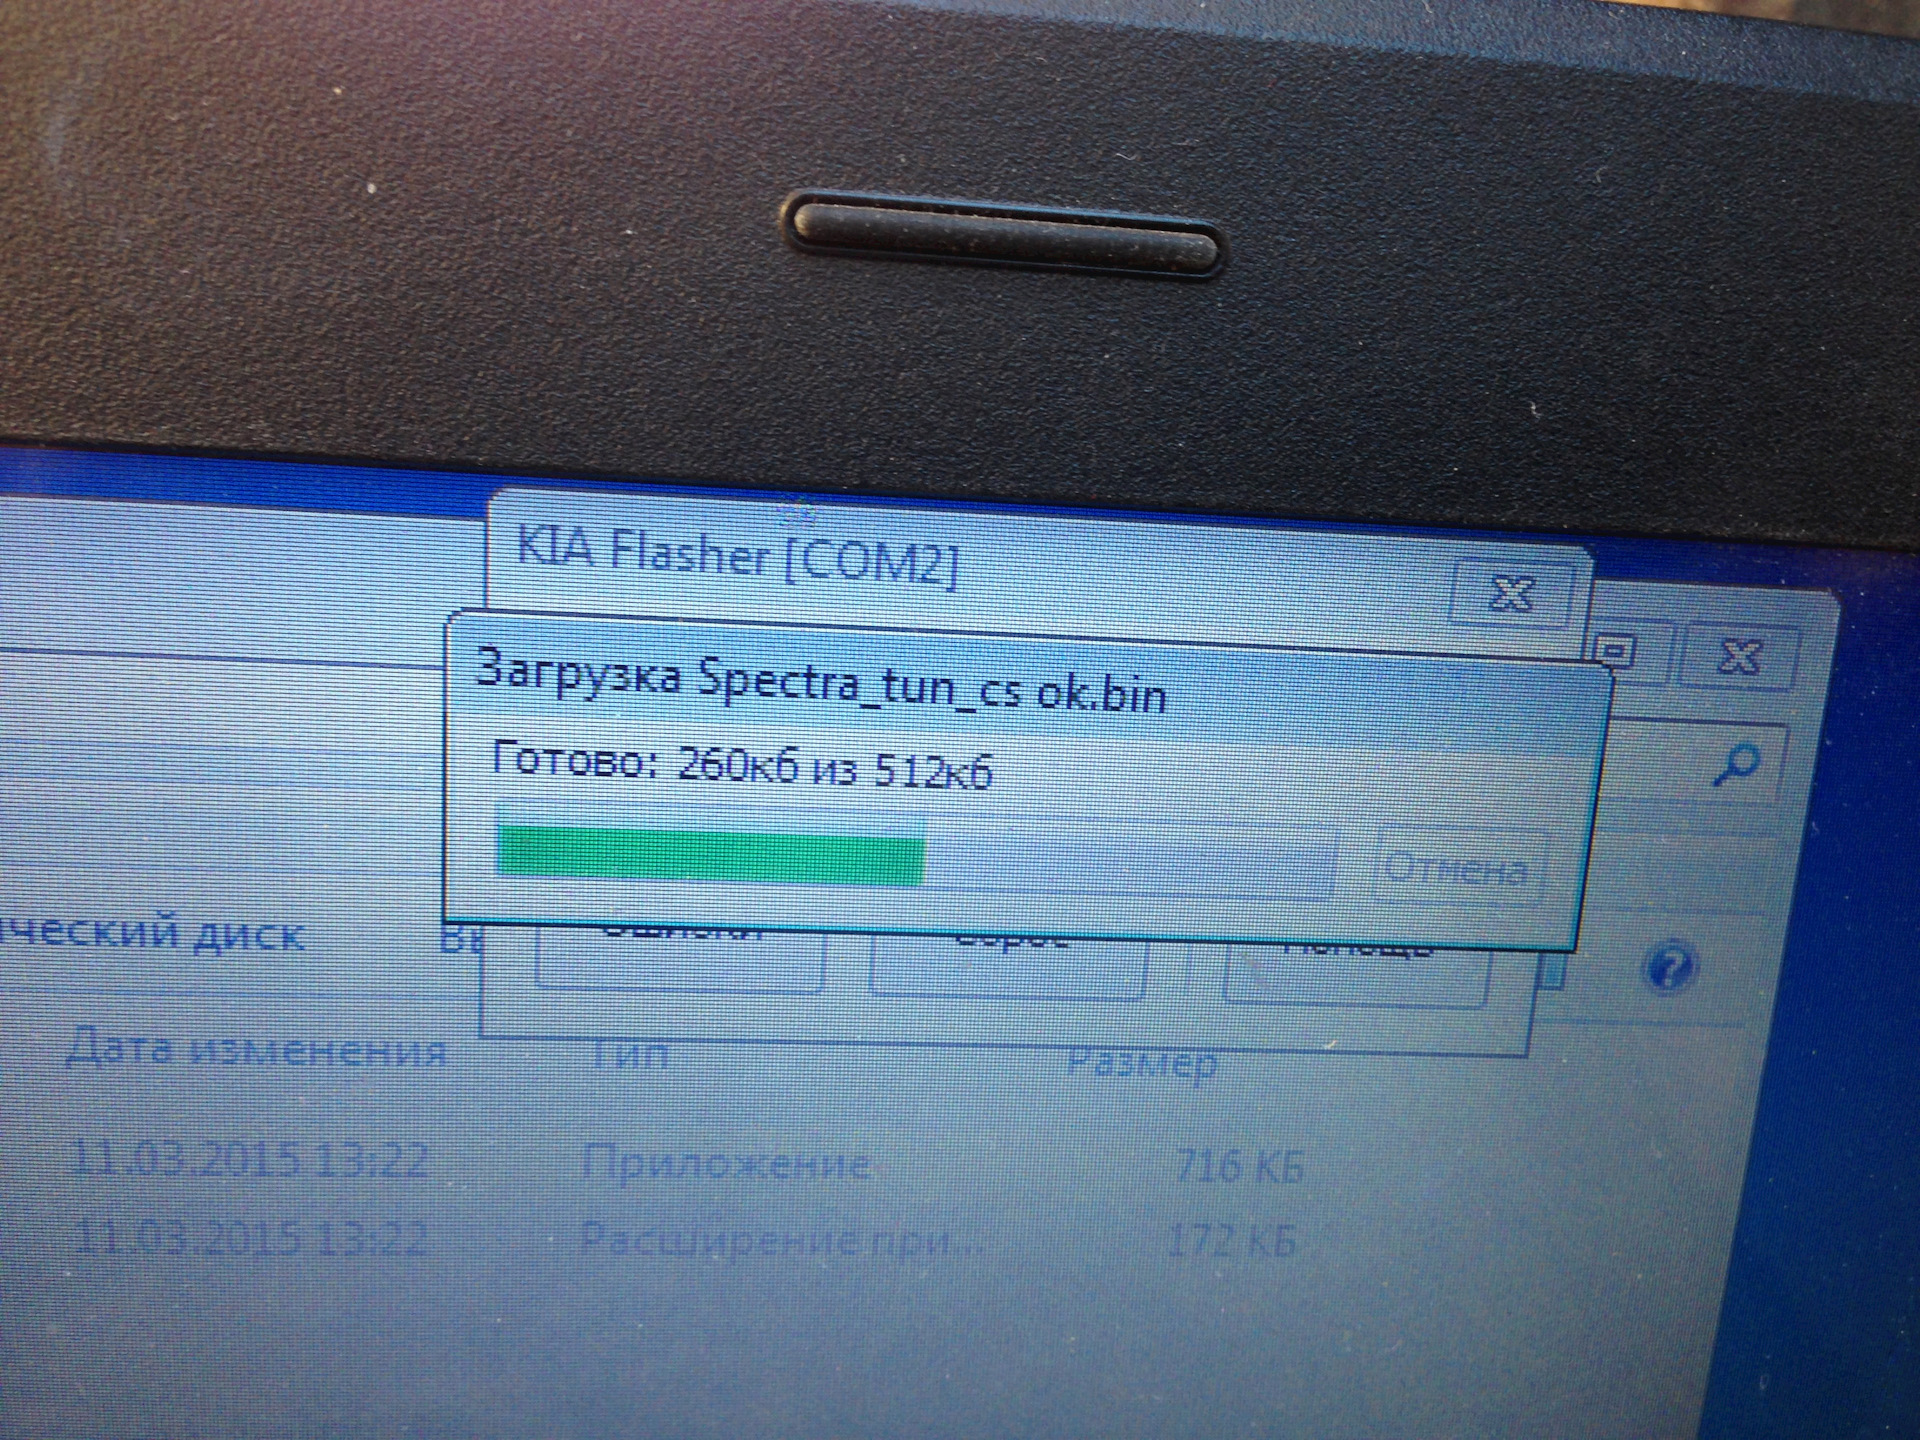 Kia flasher под Windows 7. Загрузка спектрум